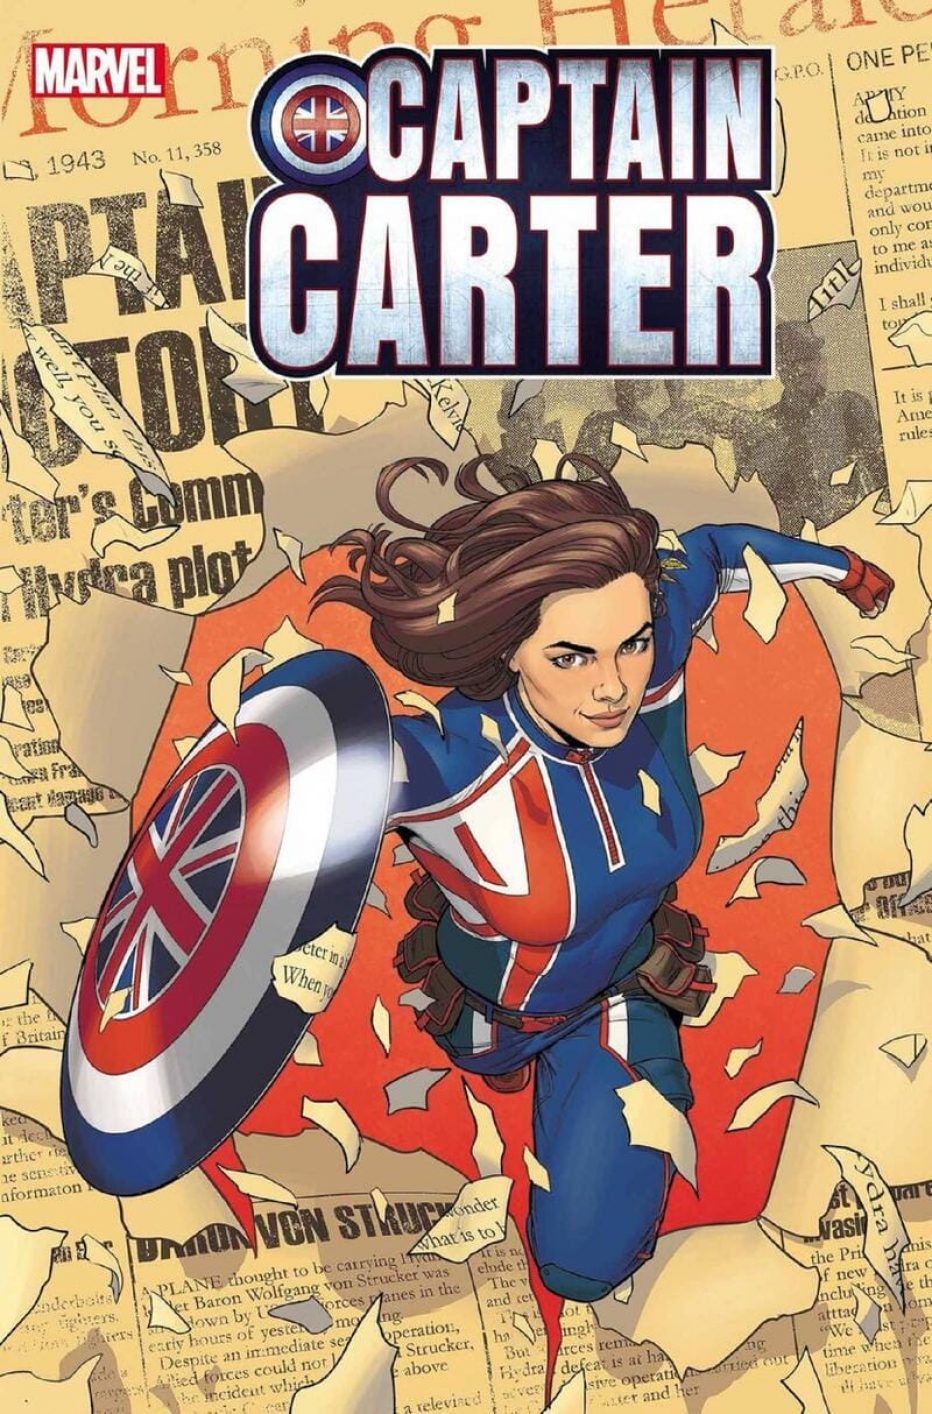 La nuova miniserie dedicata a Captain Carter